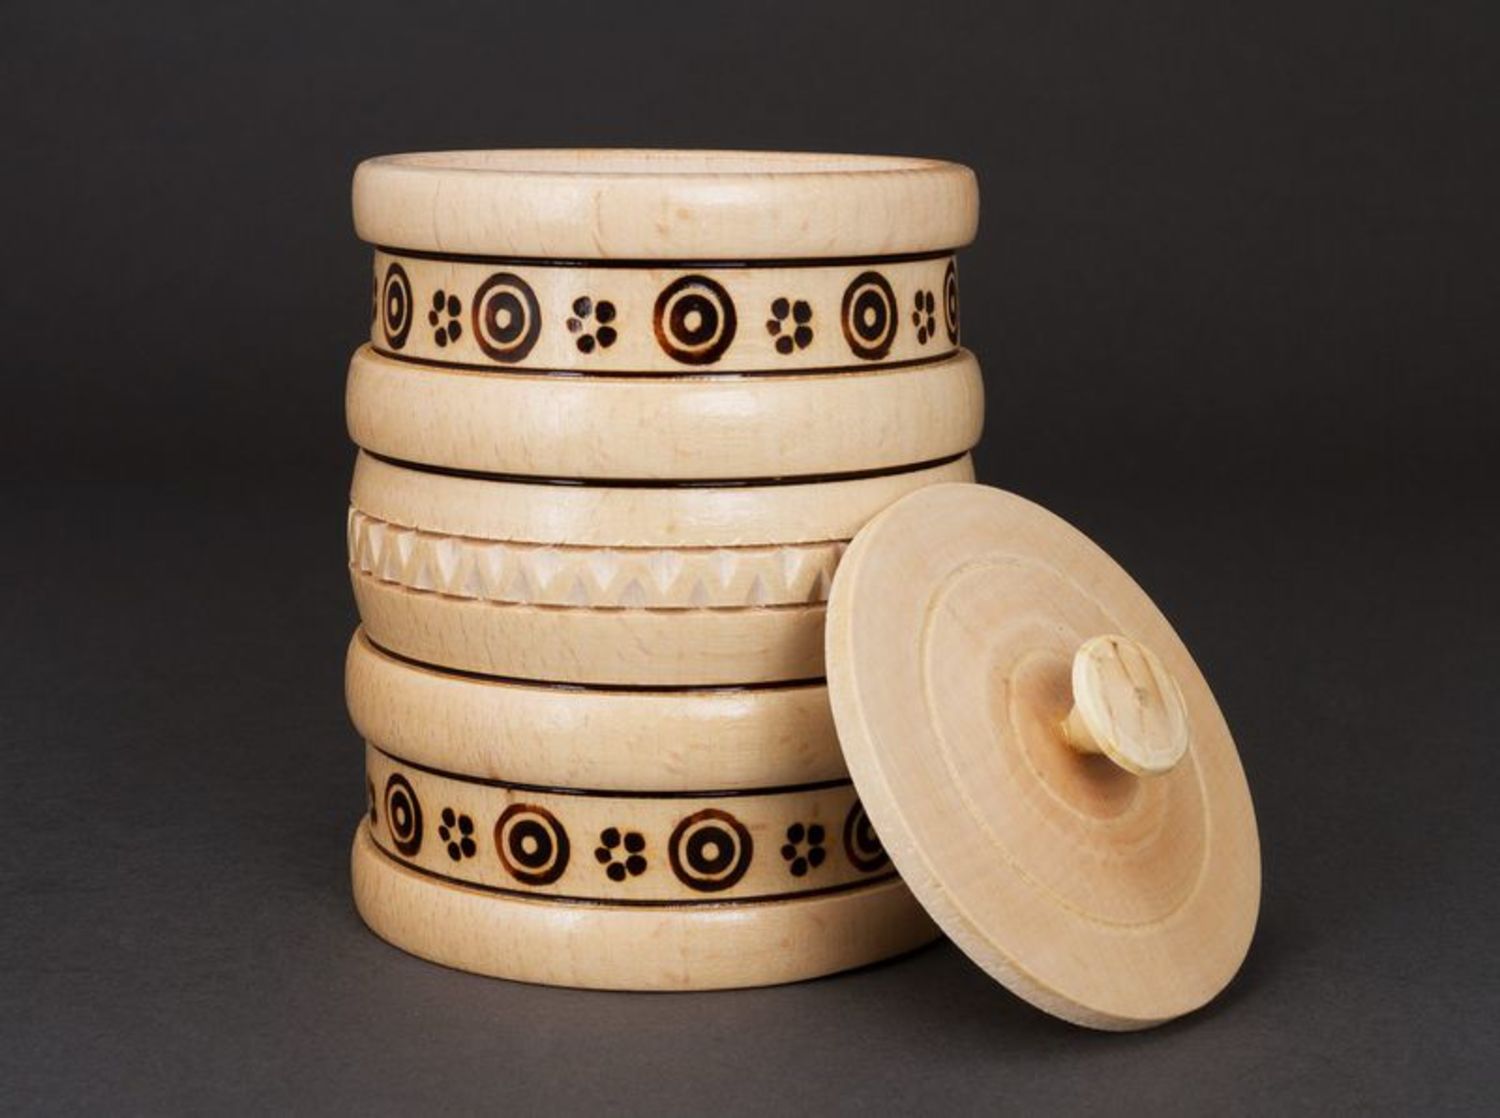 10 oz wooden handmade jar for kitchen décor 0,6 lb photo 4